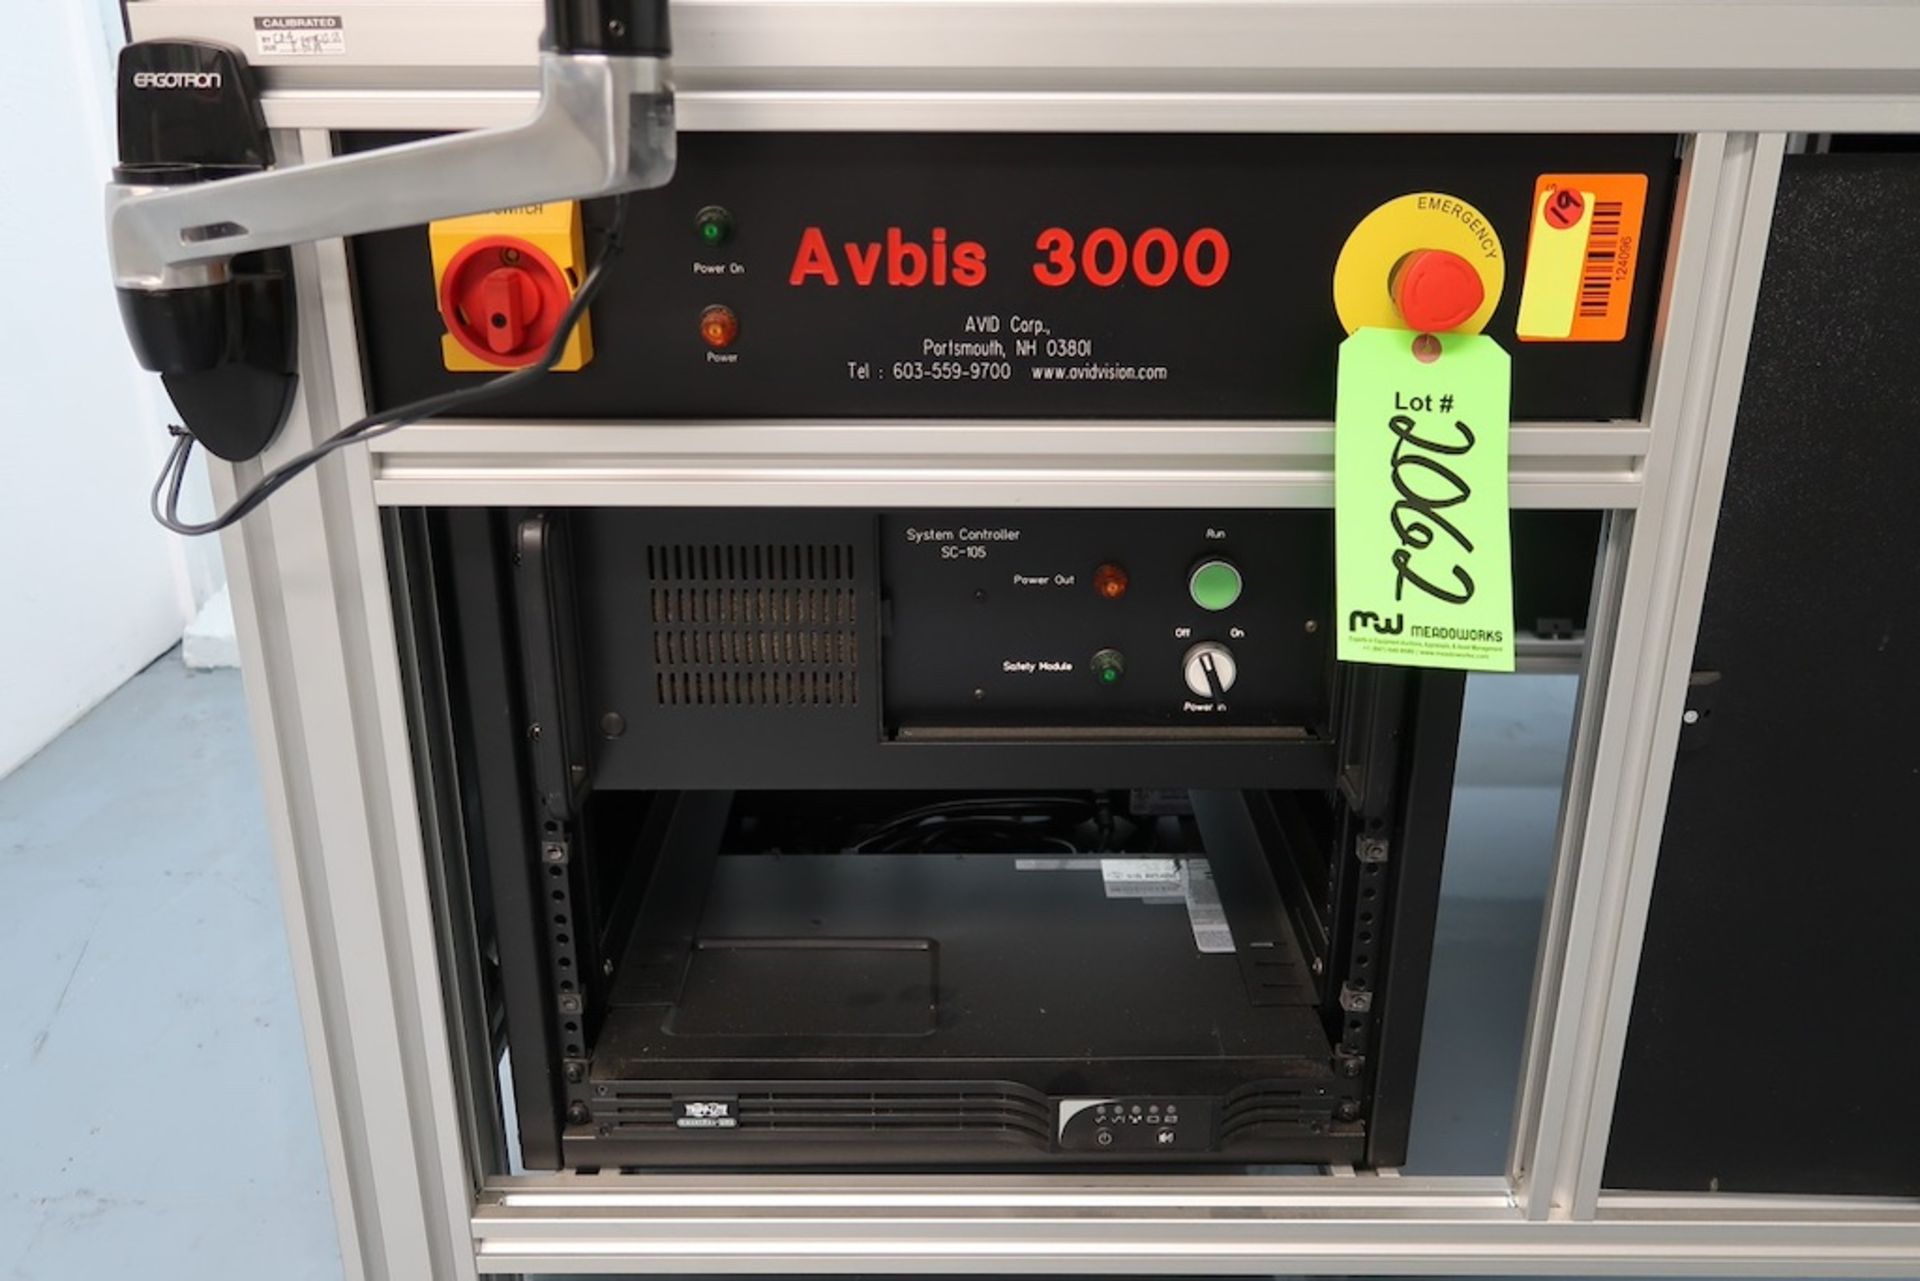 Avid Corp Avbis 3000 Automated Bottle Measurement Inspection System - Image 9 of 9